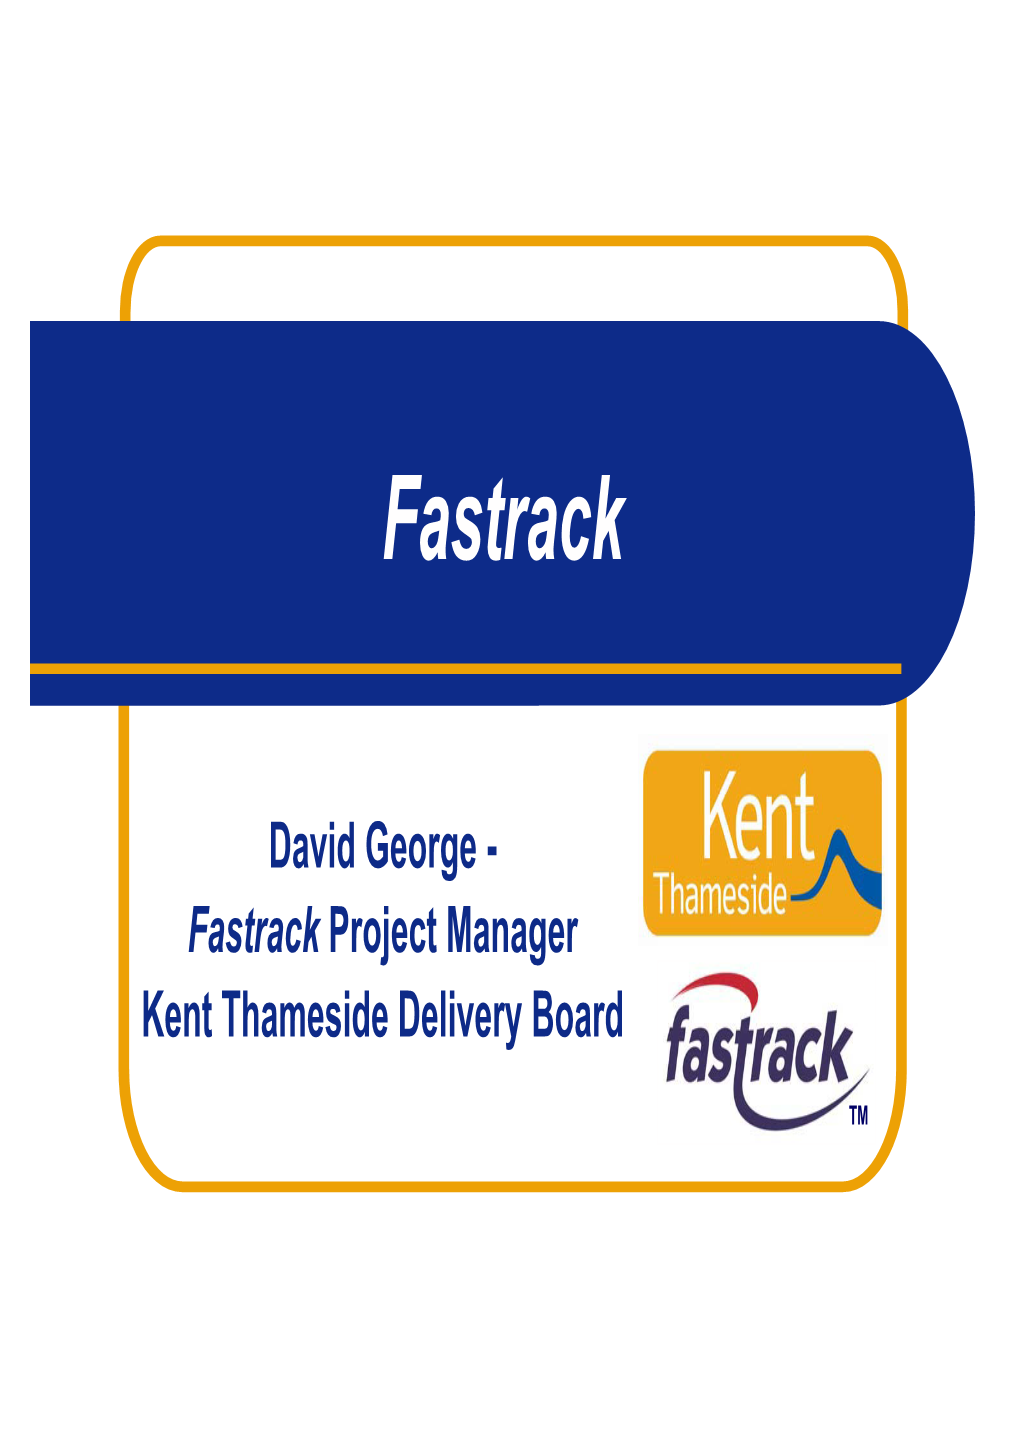 Thames Gateway and Kent Thameside – Fastrack